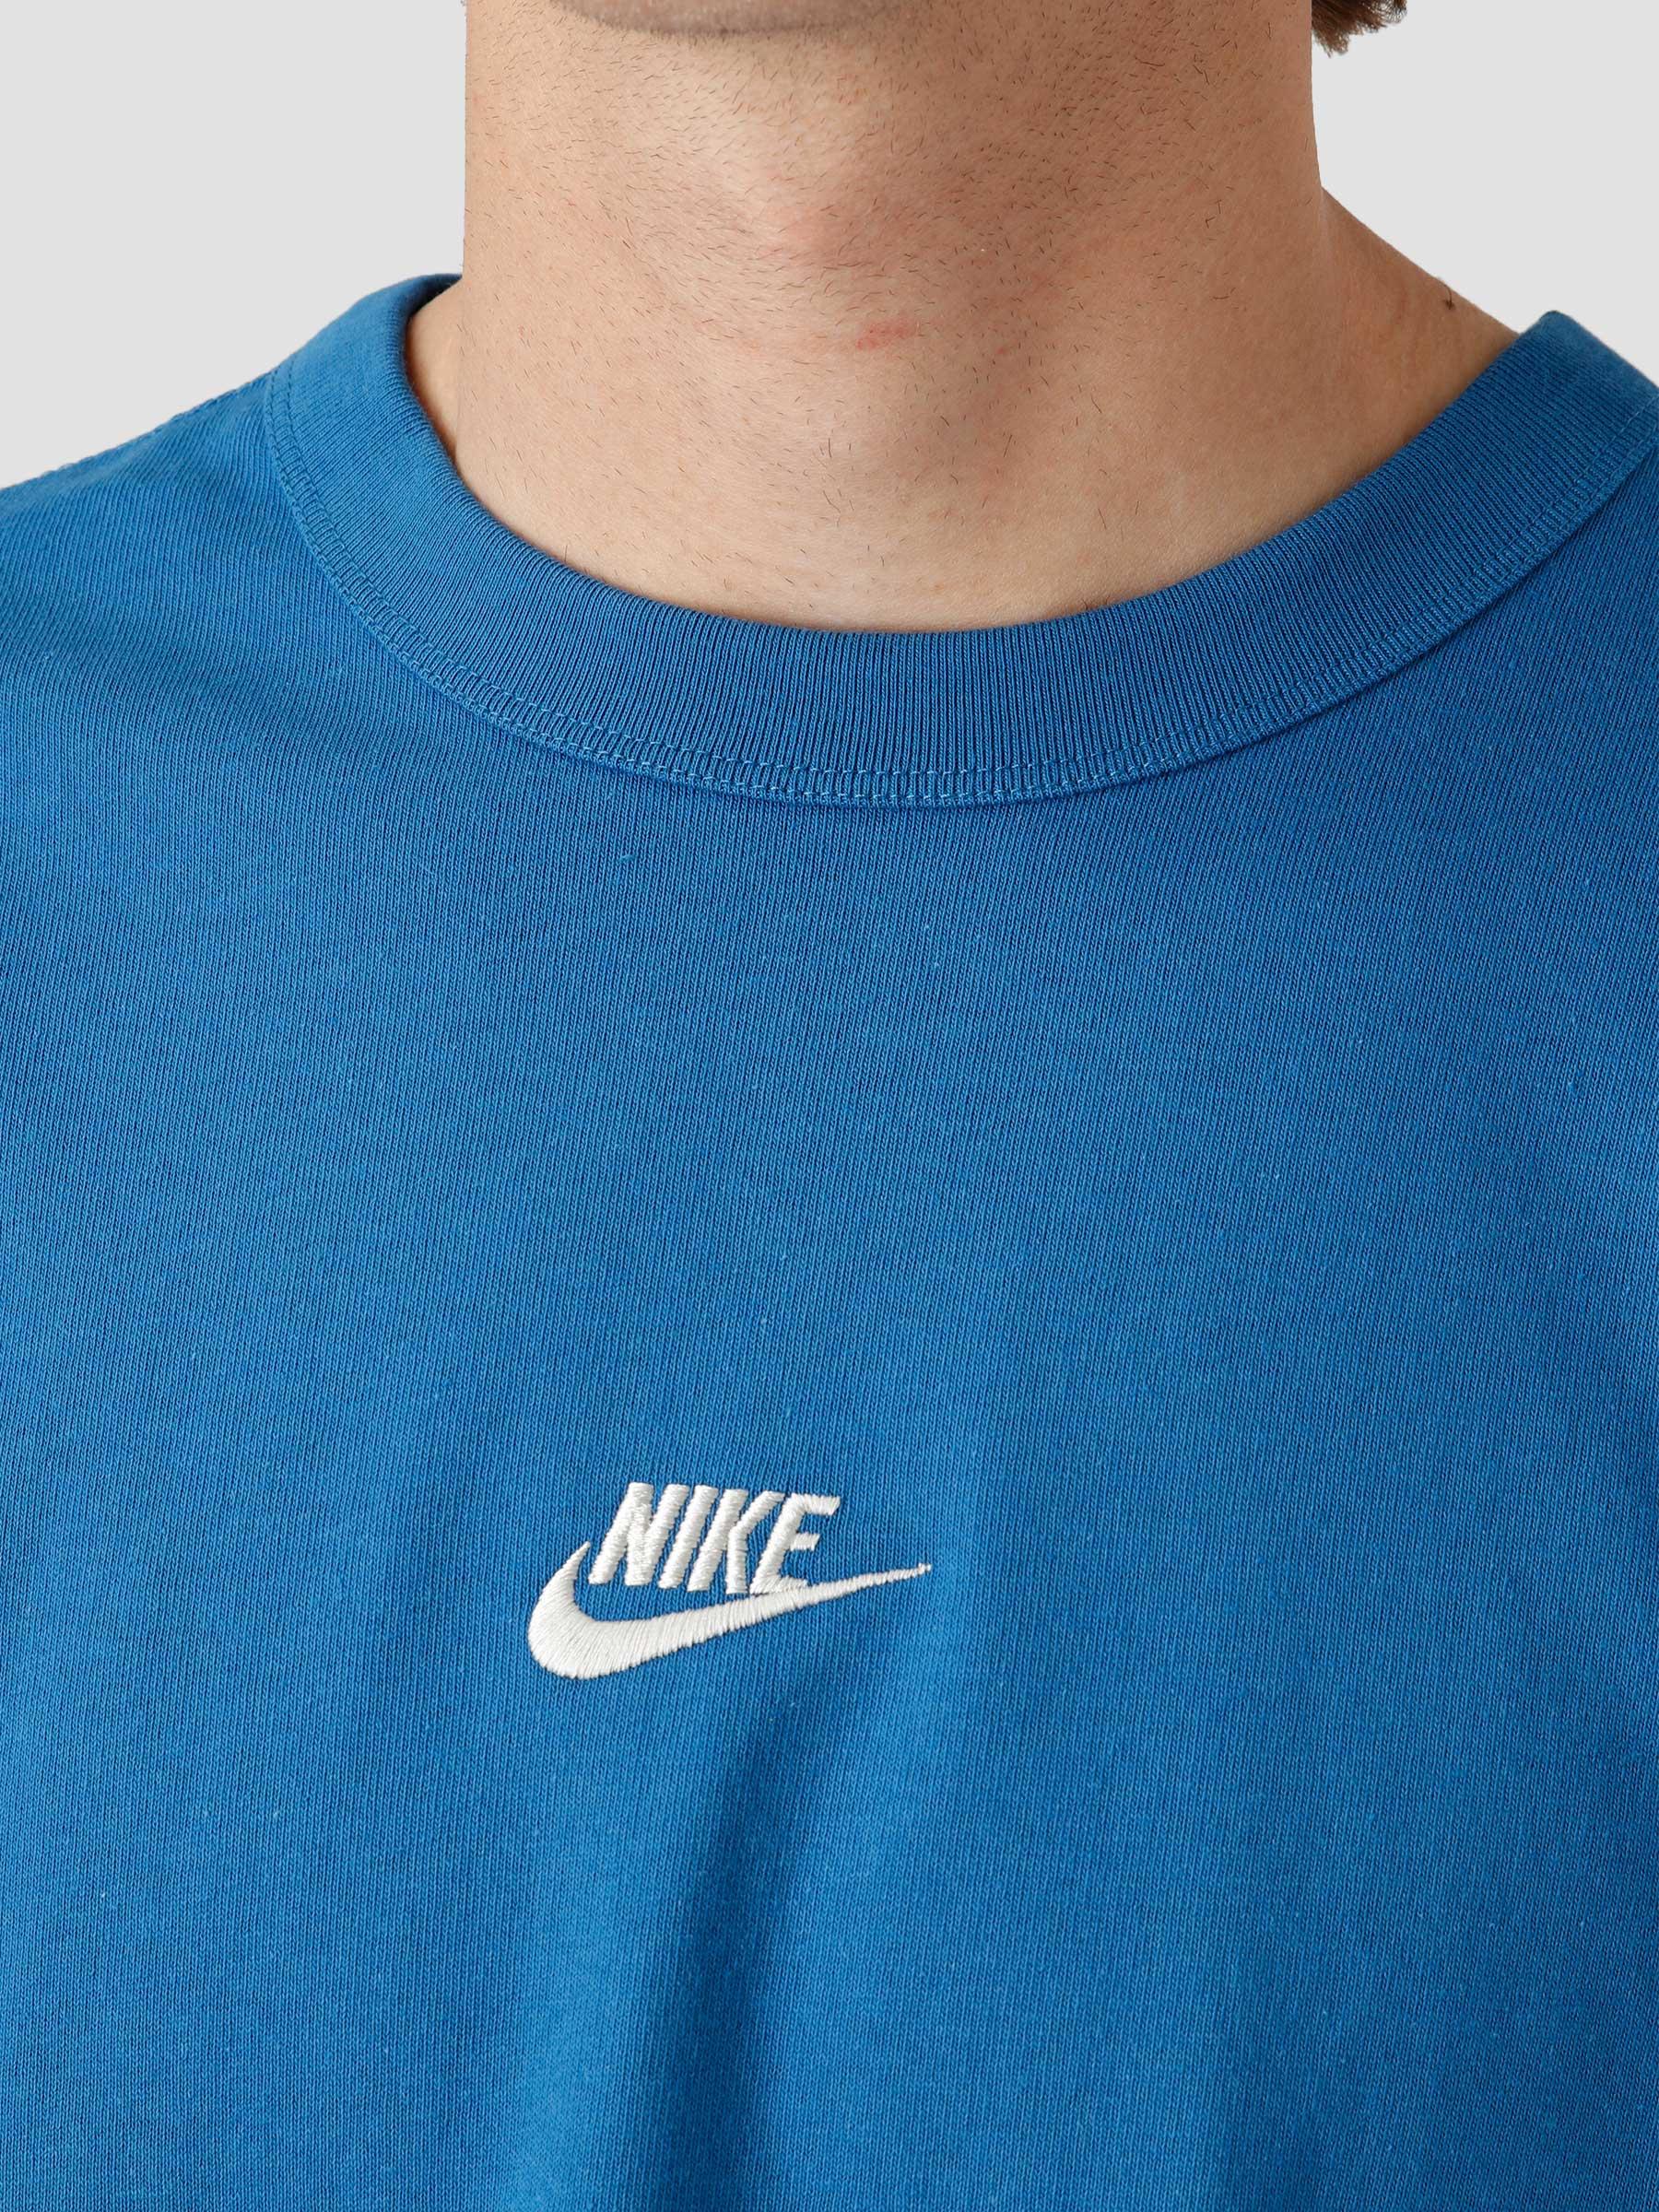 Nike M NSW Premium Essentials Dk Marina Blue Light Bone - Freshcotton